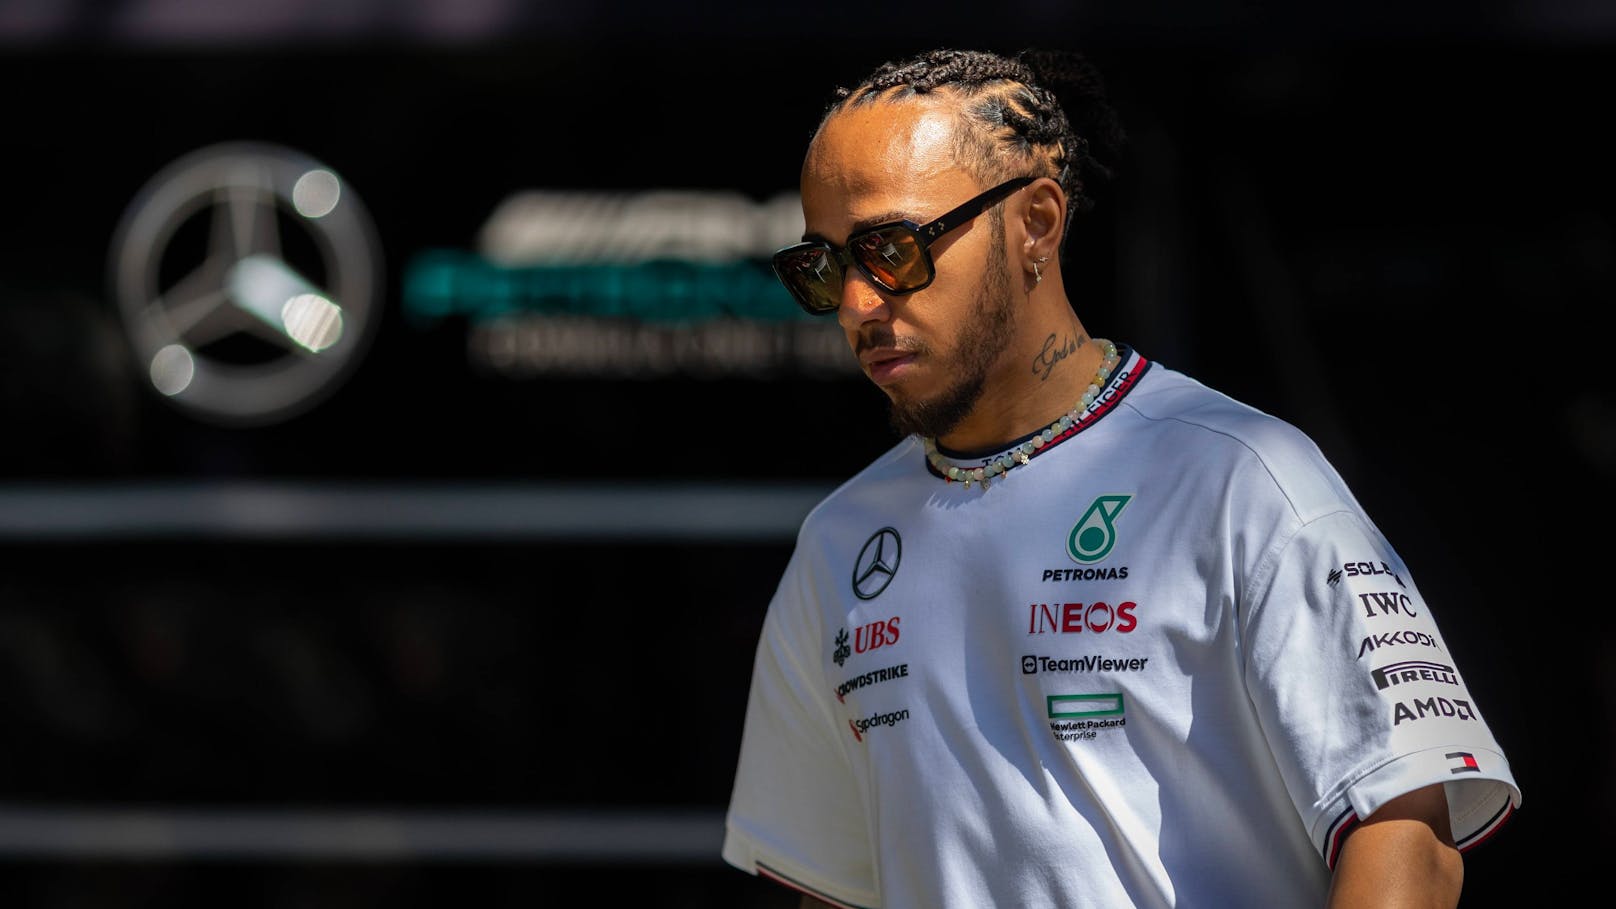 Harte Kritik an Hamilton: "Lewis kann das nicht"